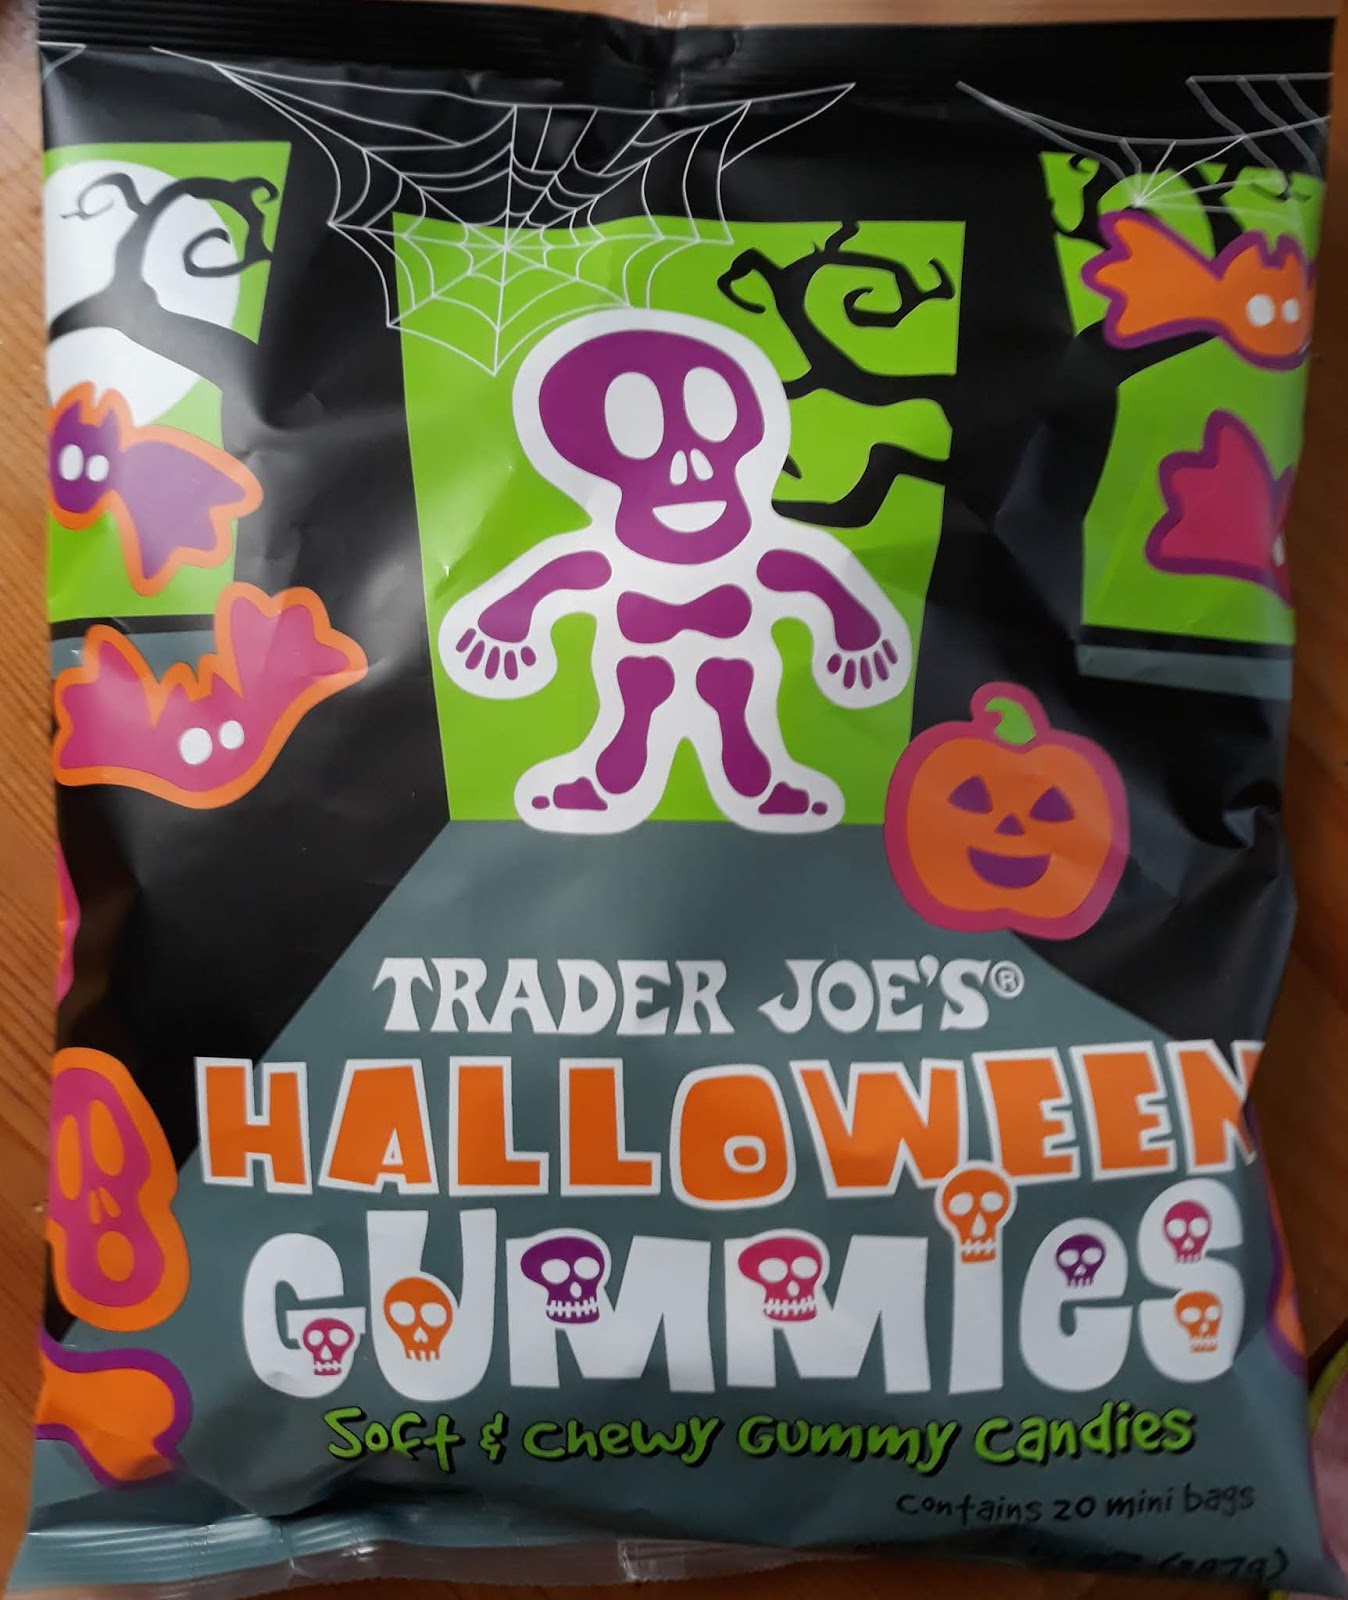 What's Good at Trader Joe's? Trader Joe's Halloween Gummies